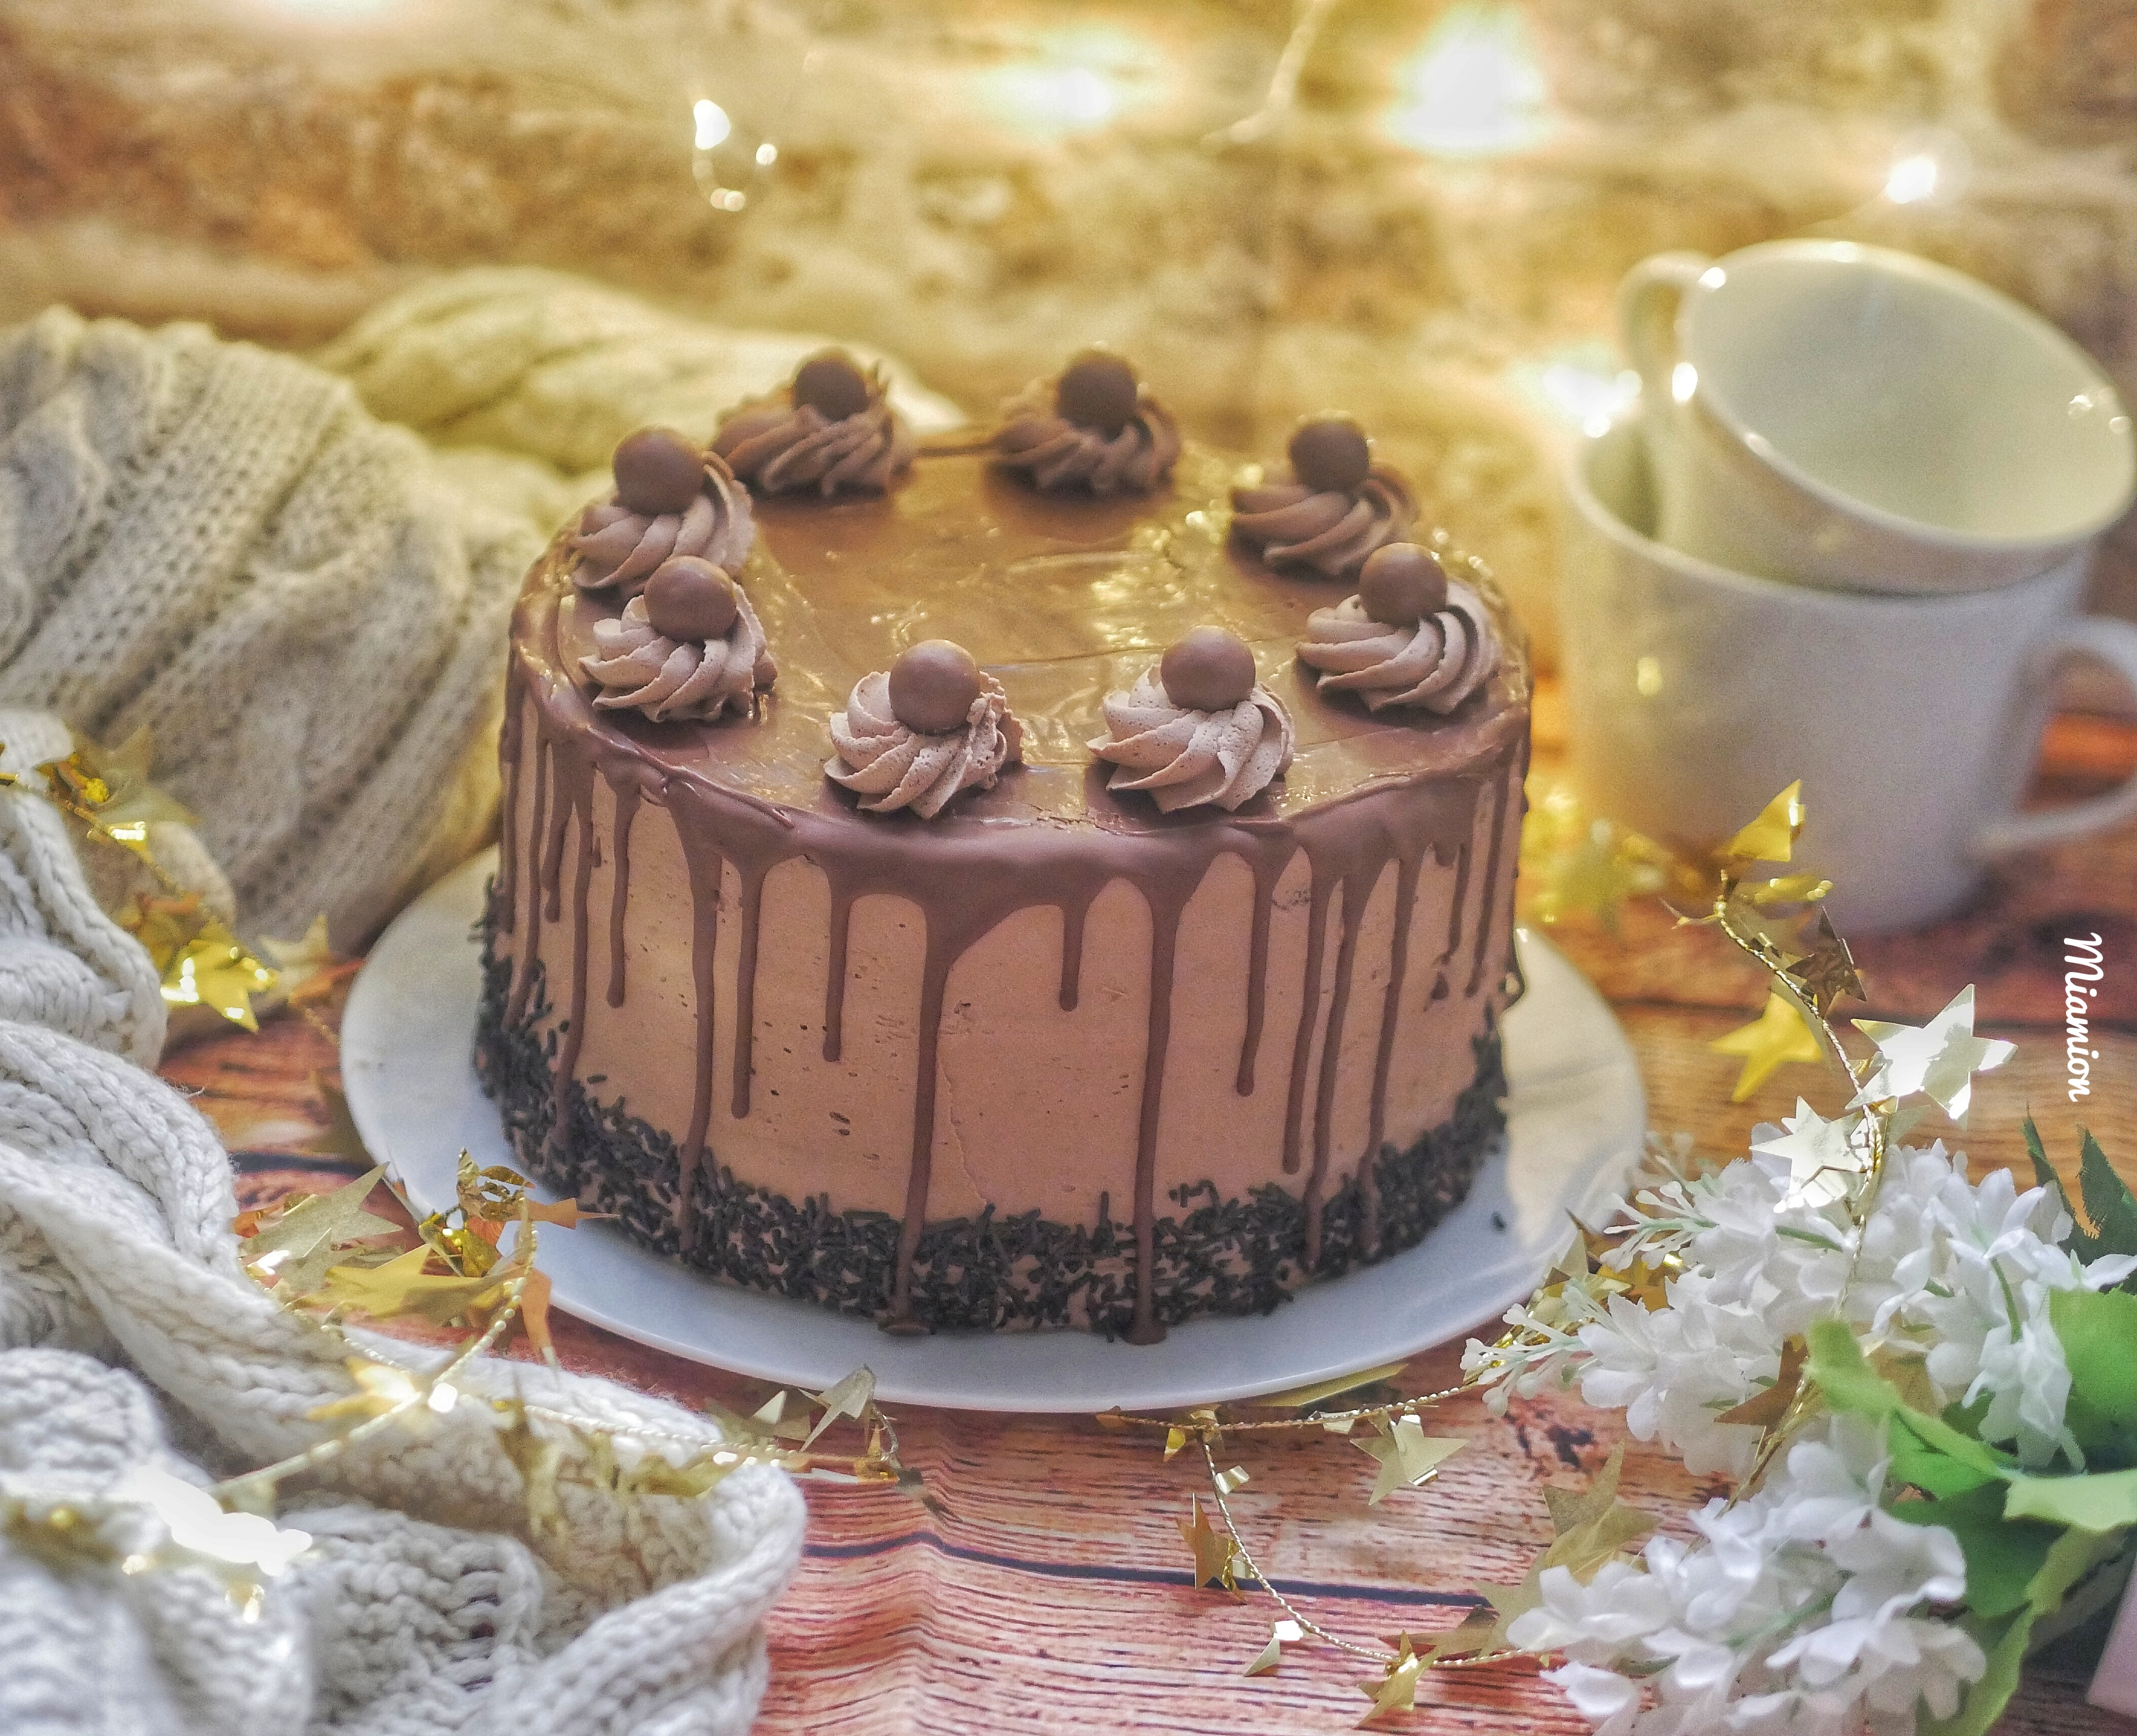 Le Layer Cake au chocolat